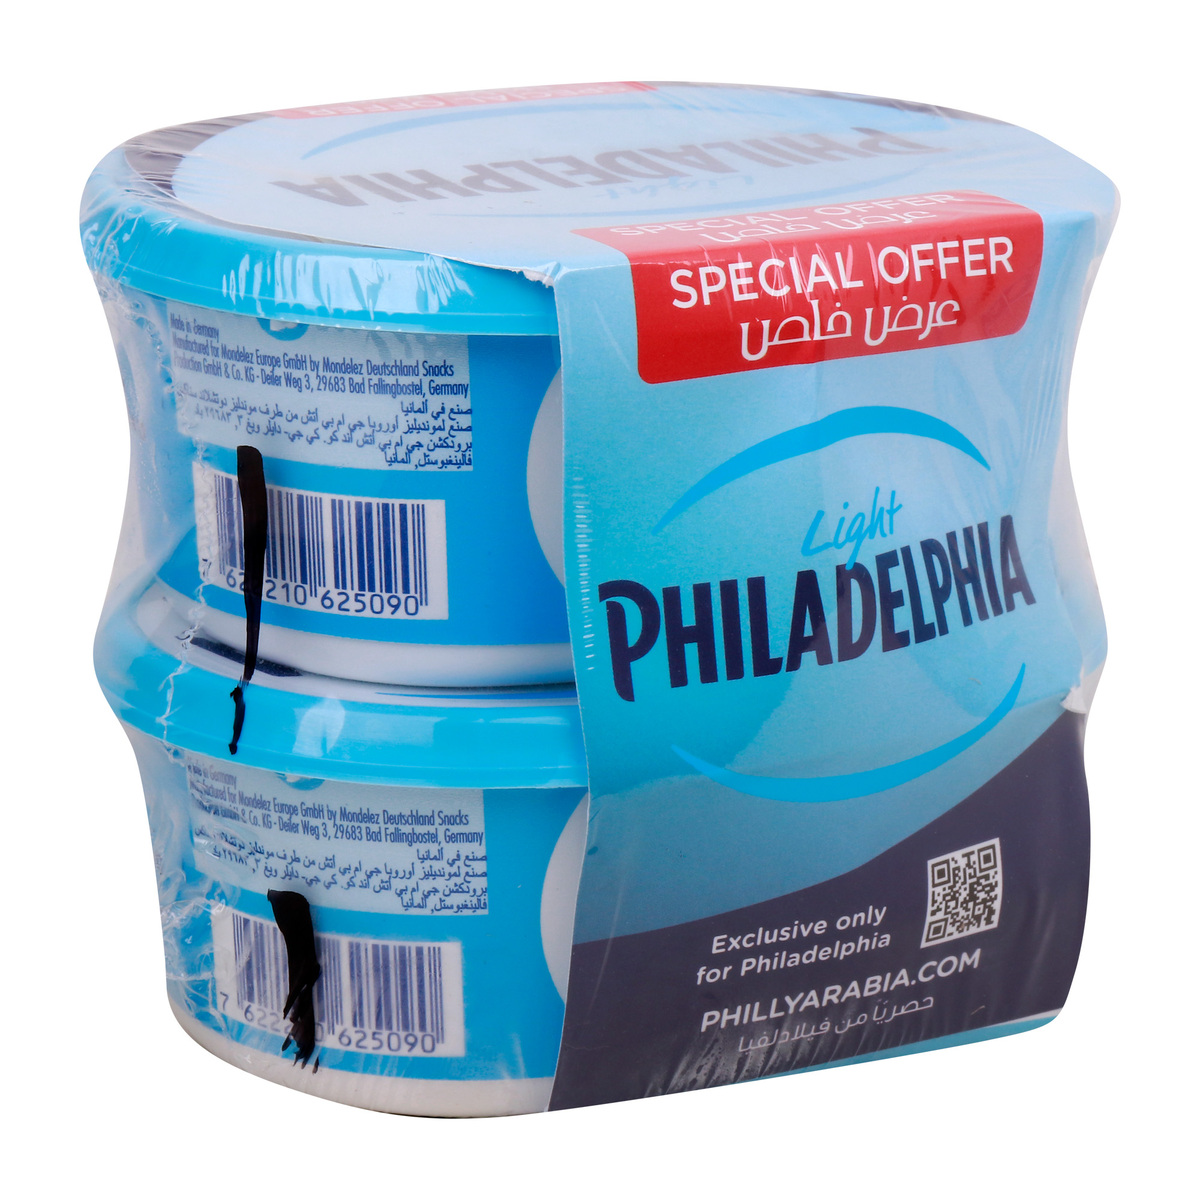 Philadelphia Cream Cheese Light, 2 x 280 g